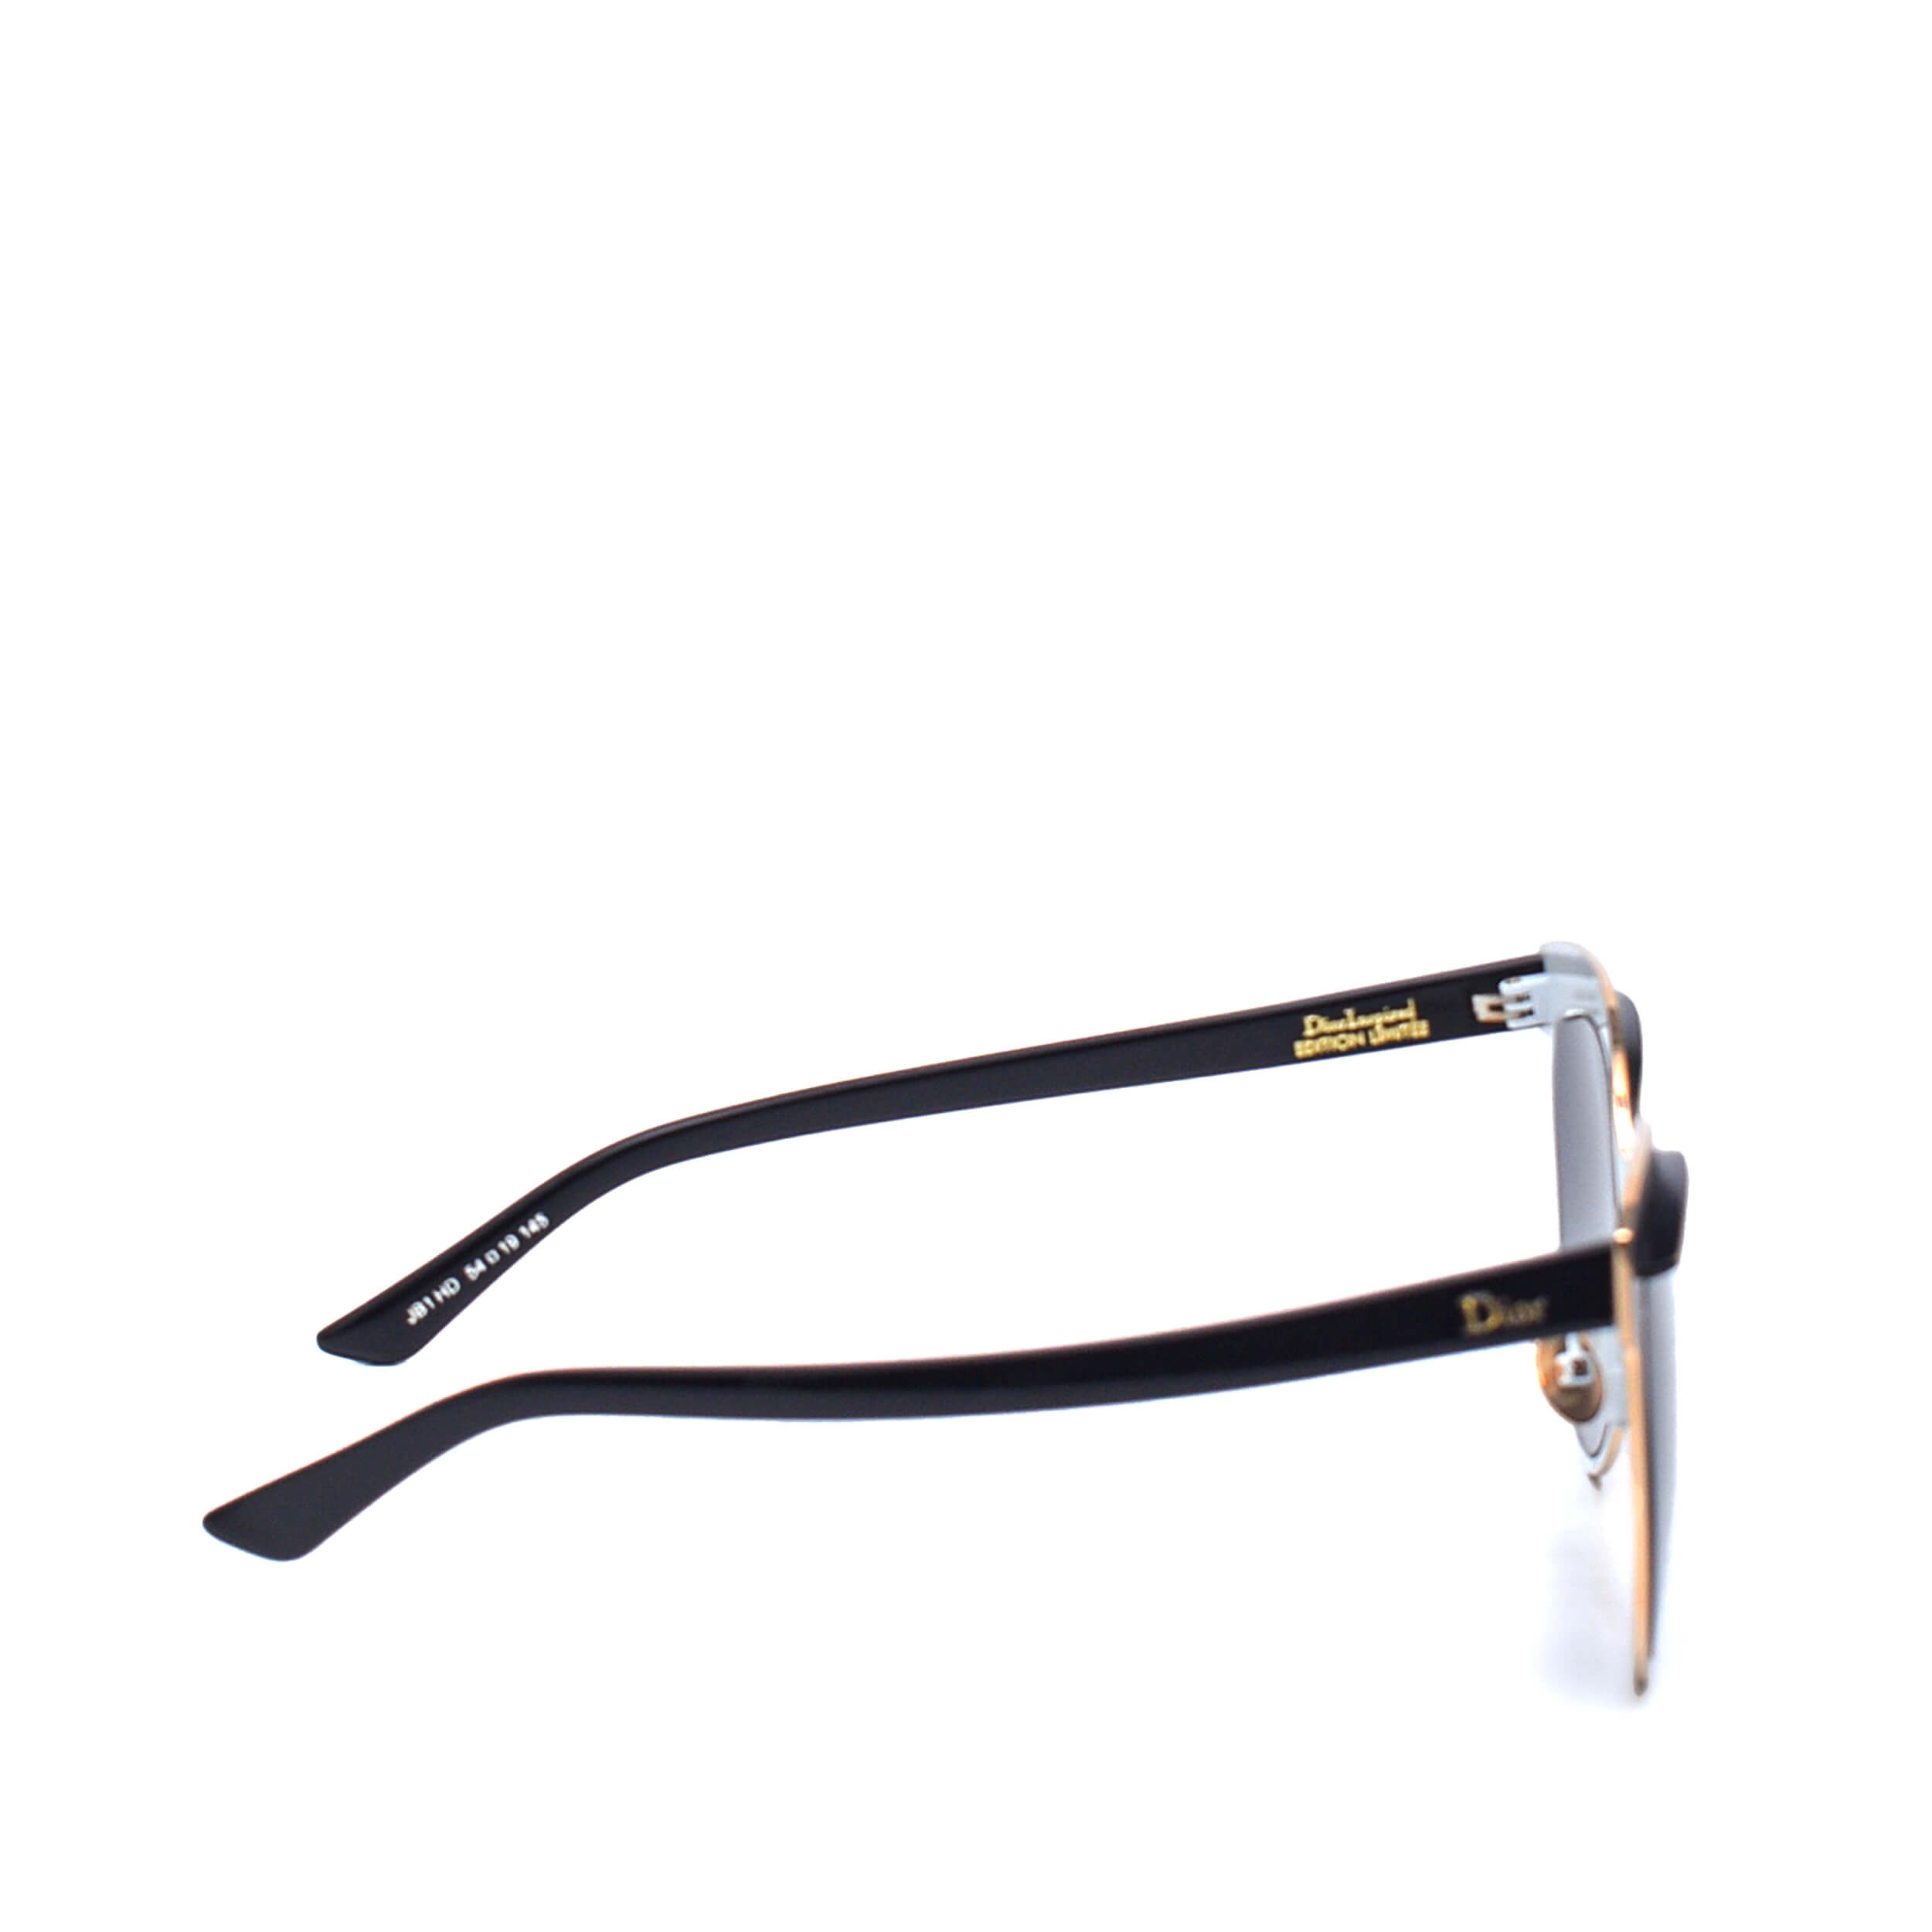 Christian Dior - Black Acetate/Metal Inspired Sunglasses